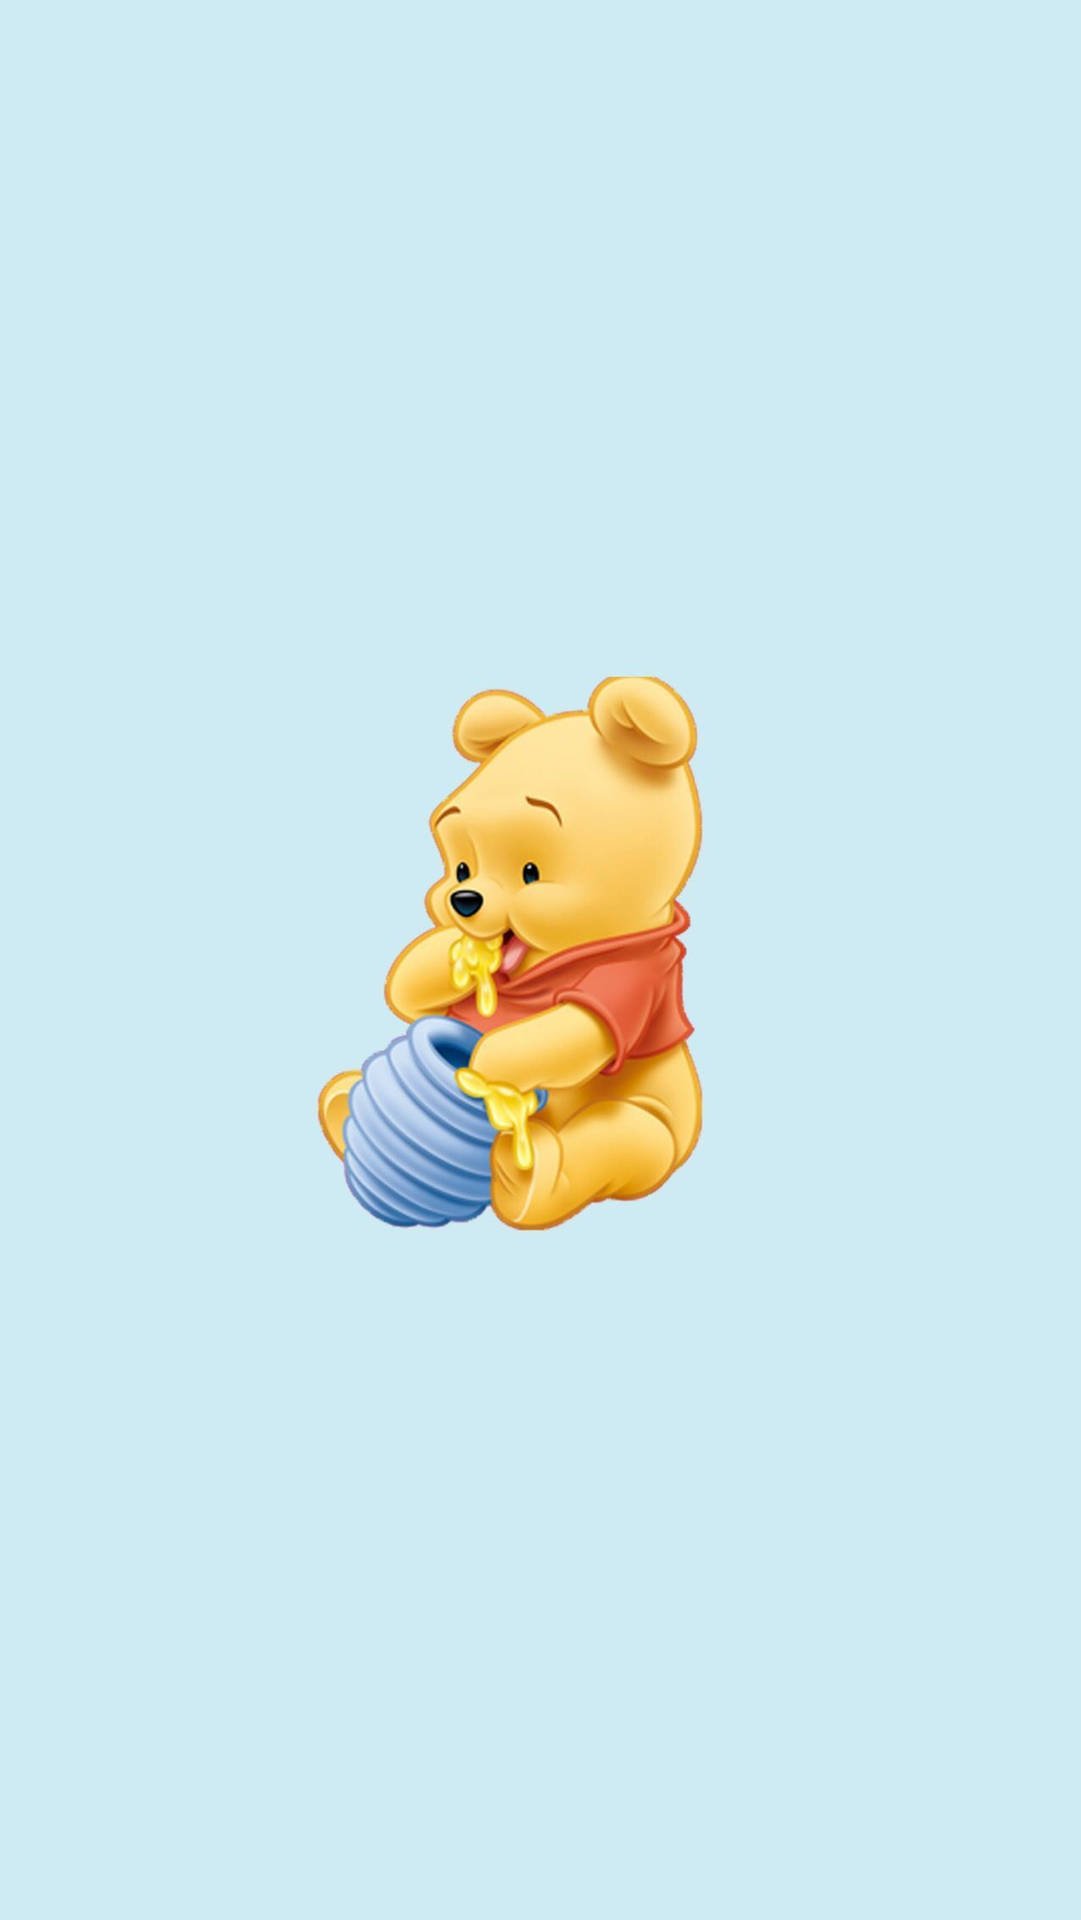 Cute Winnie The Pooh Eating Honey Background